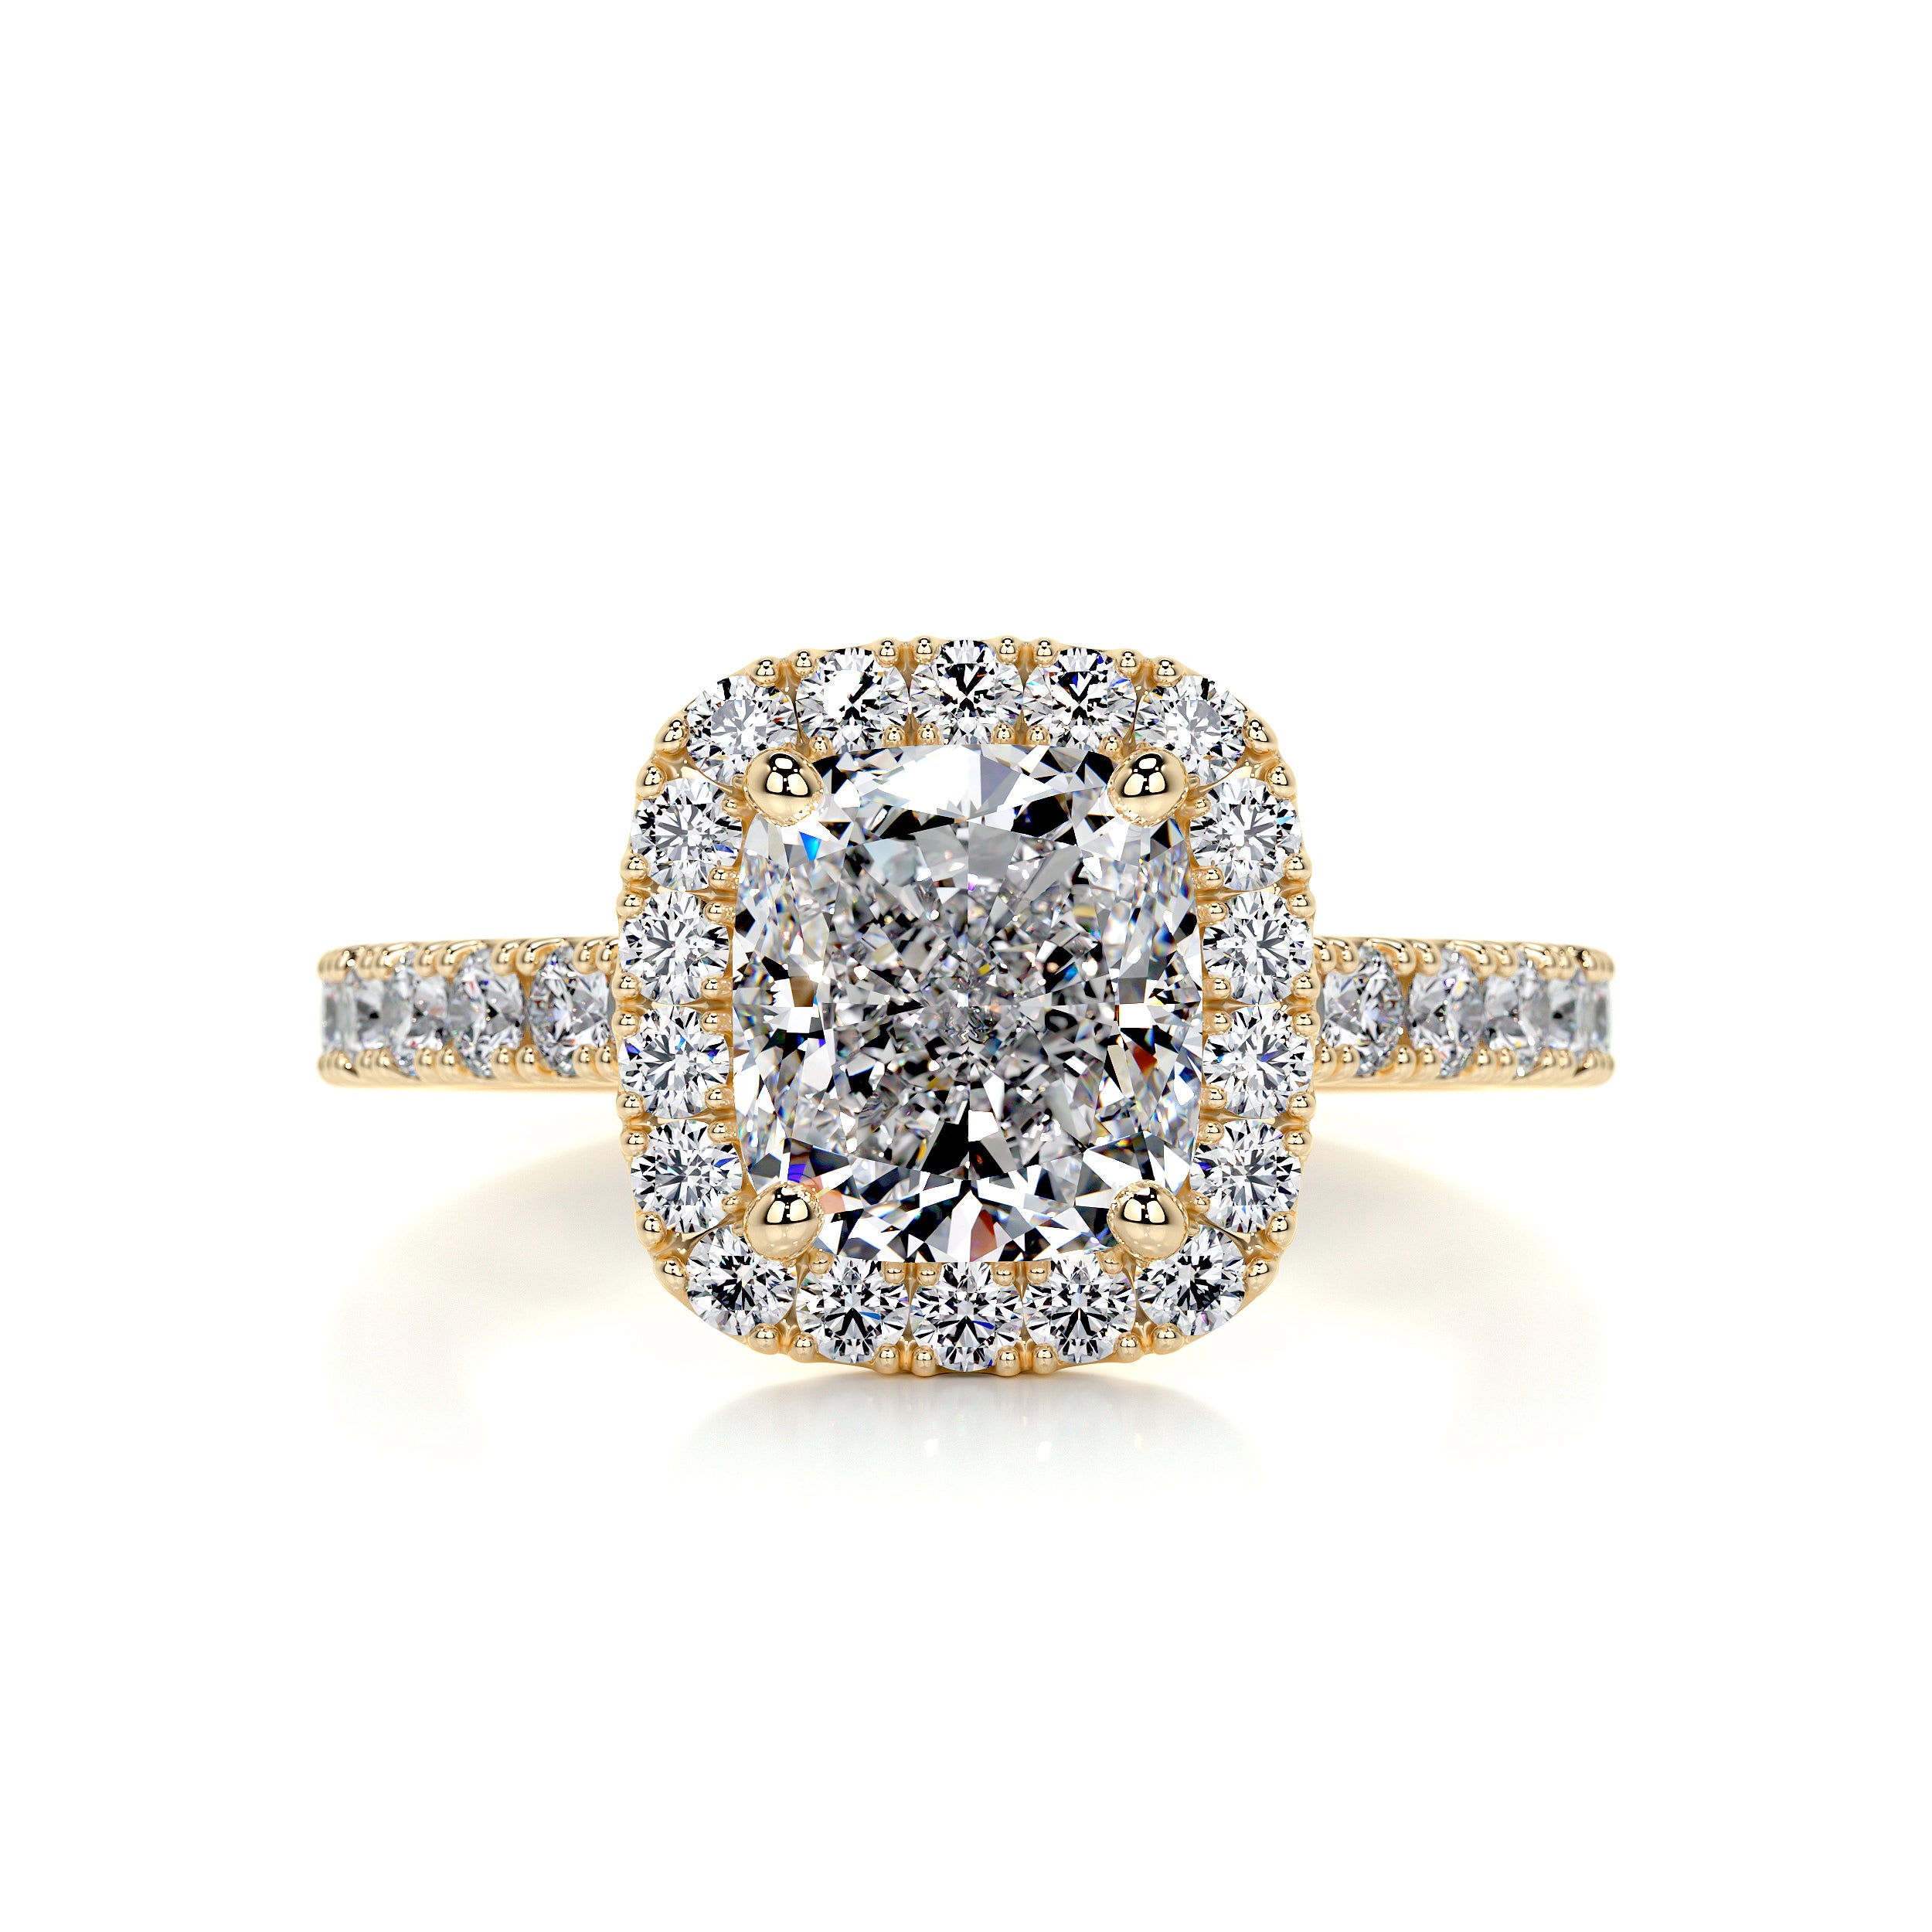 Celeste Diamond Engagement Ring   (2 Carat) -18K Yellow Gold